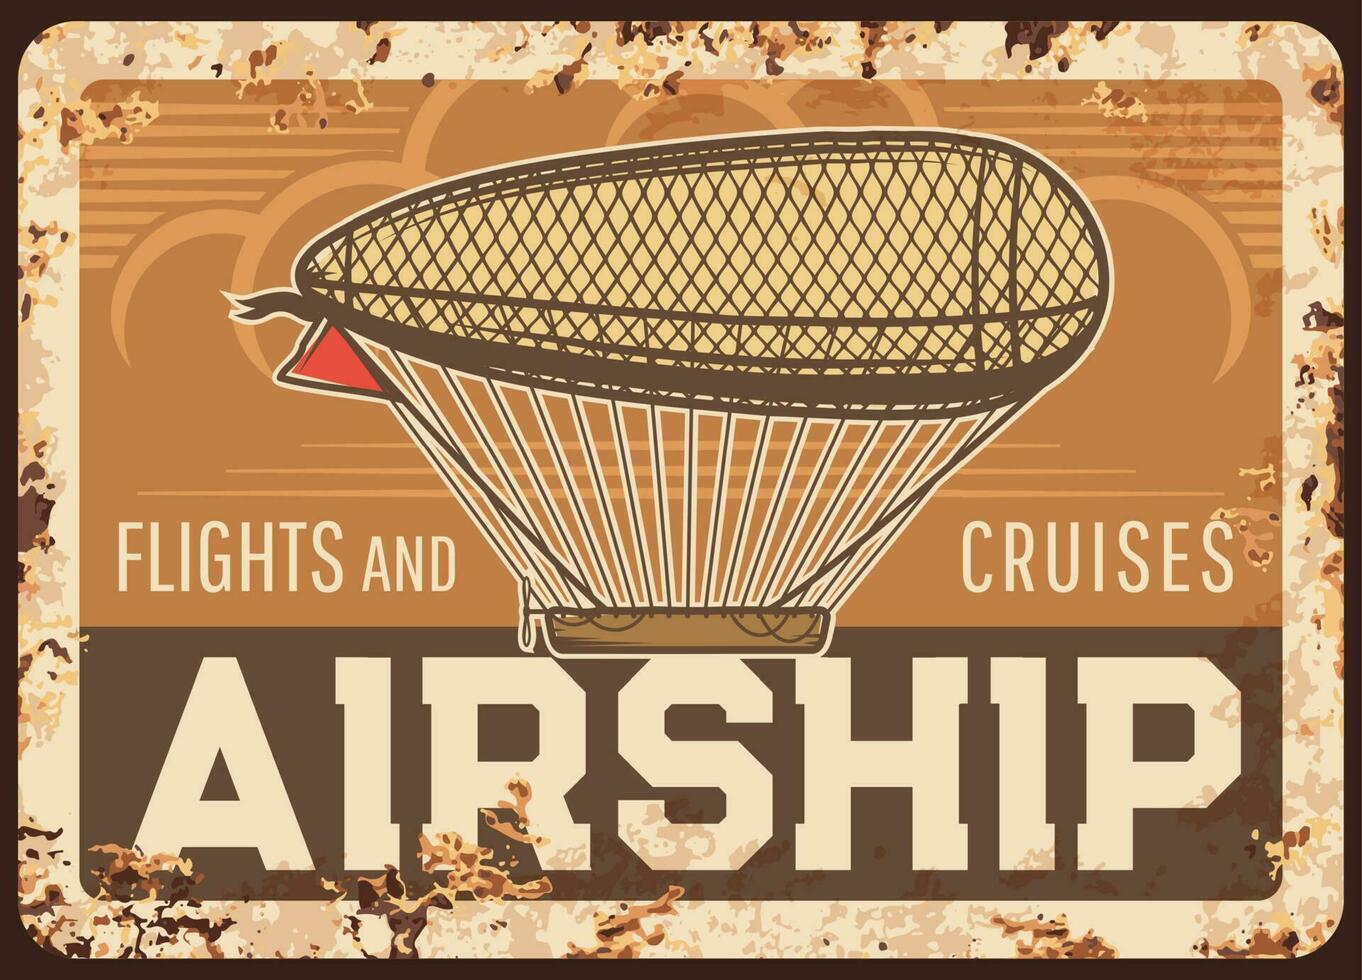 Airship flights and cruises rusty metal plate vector